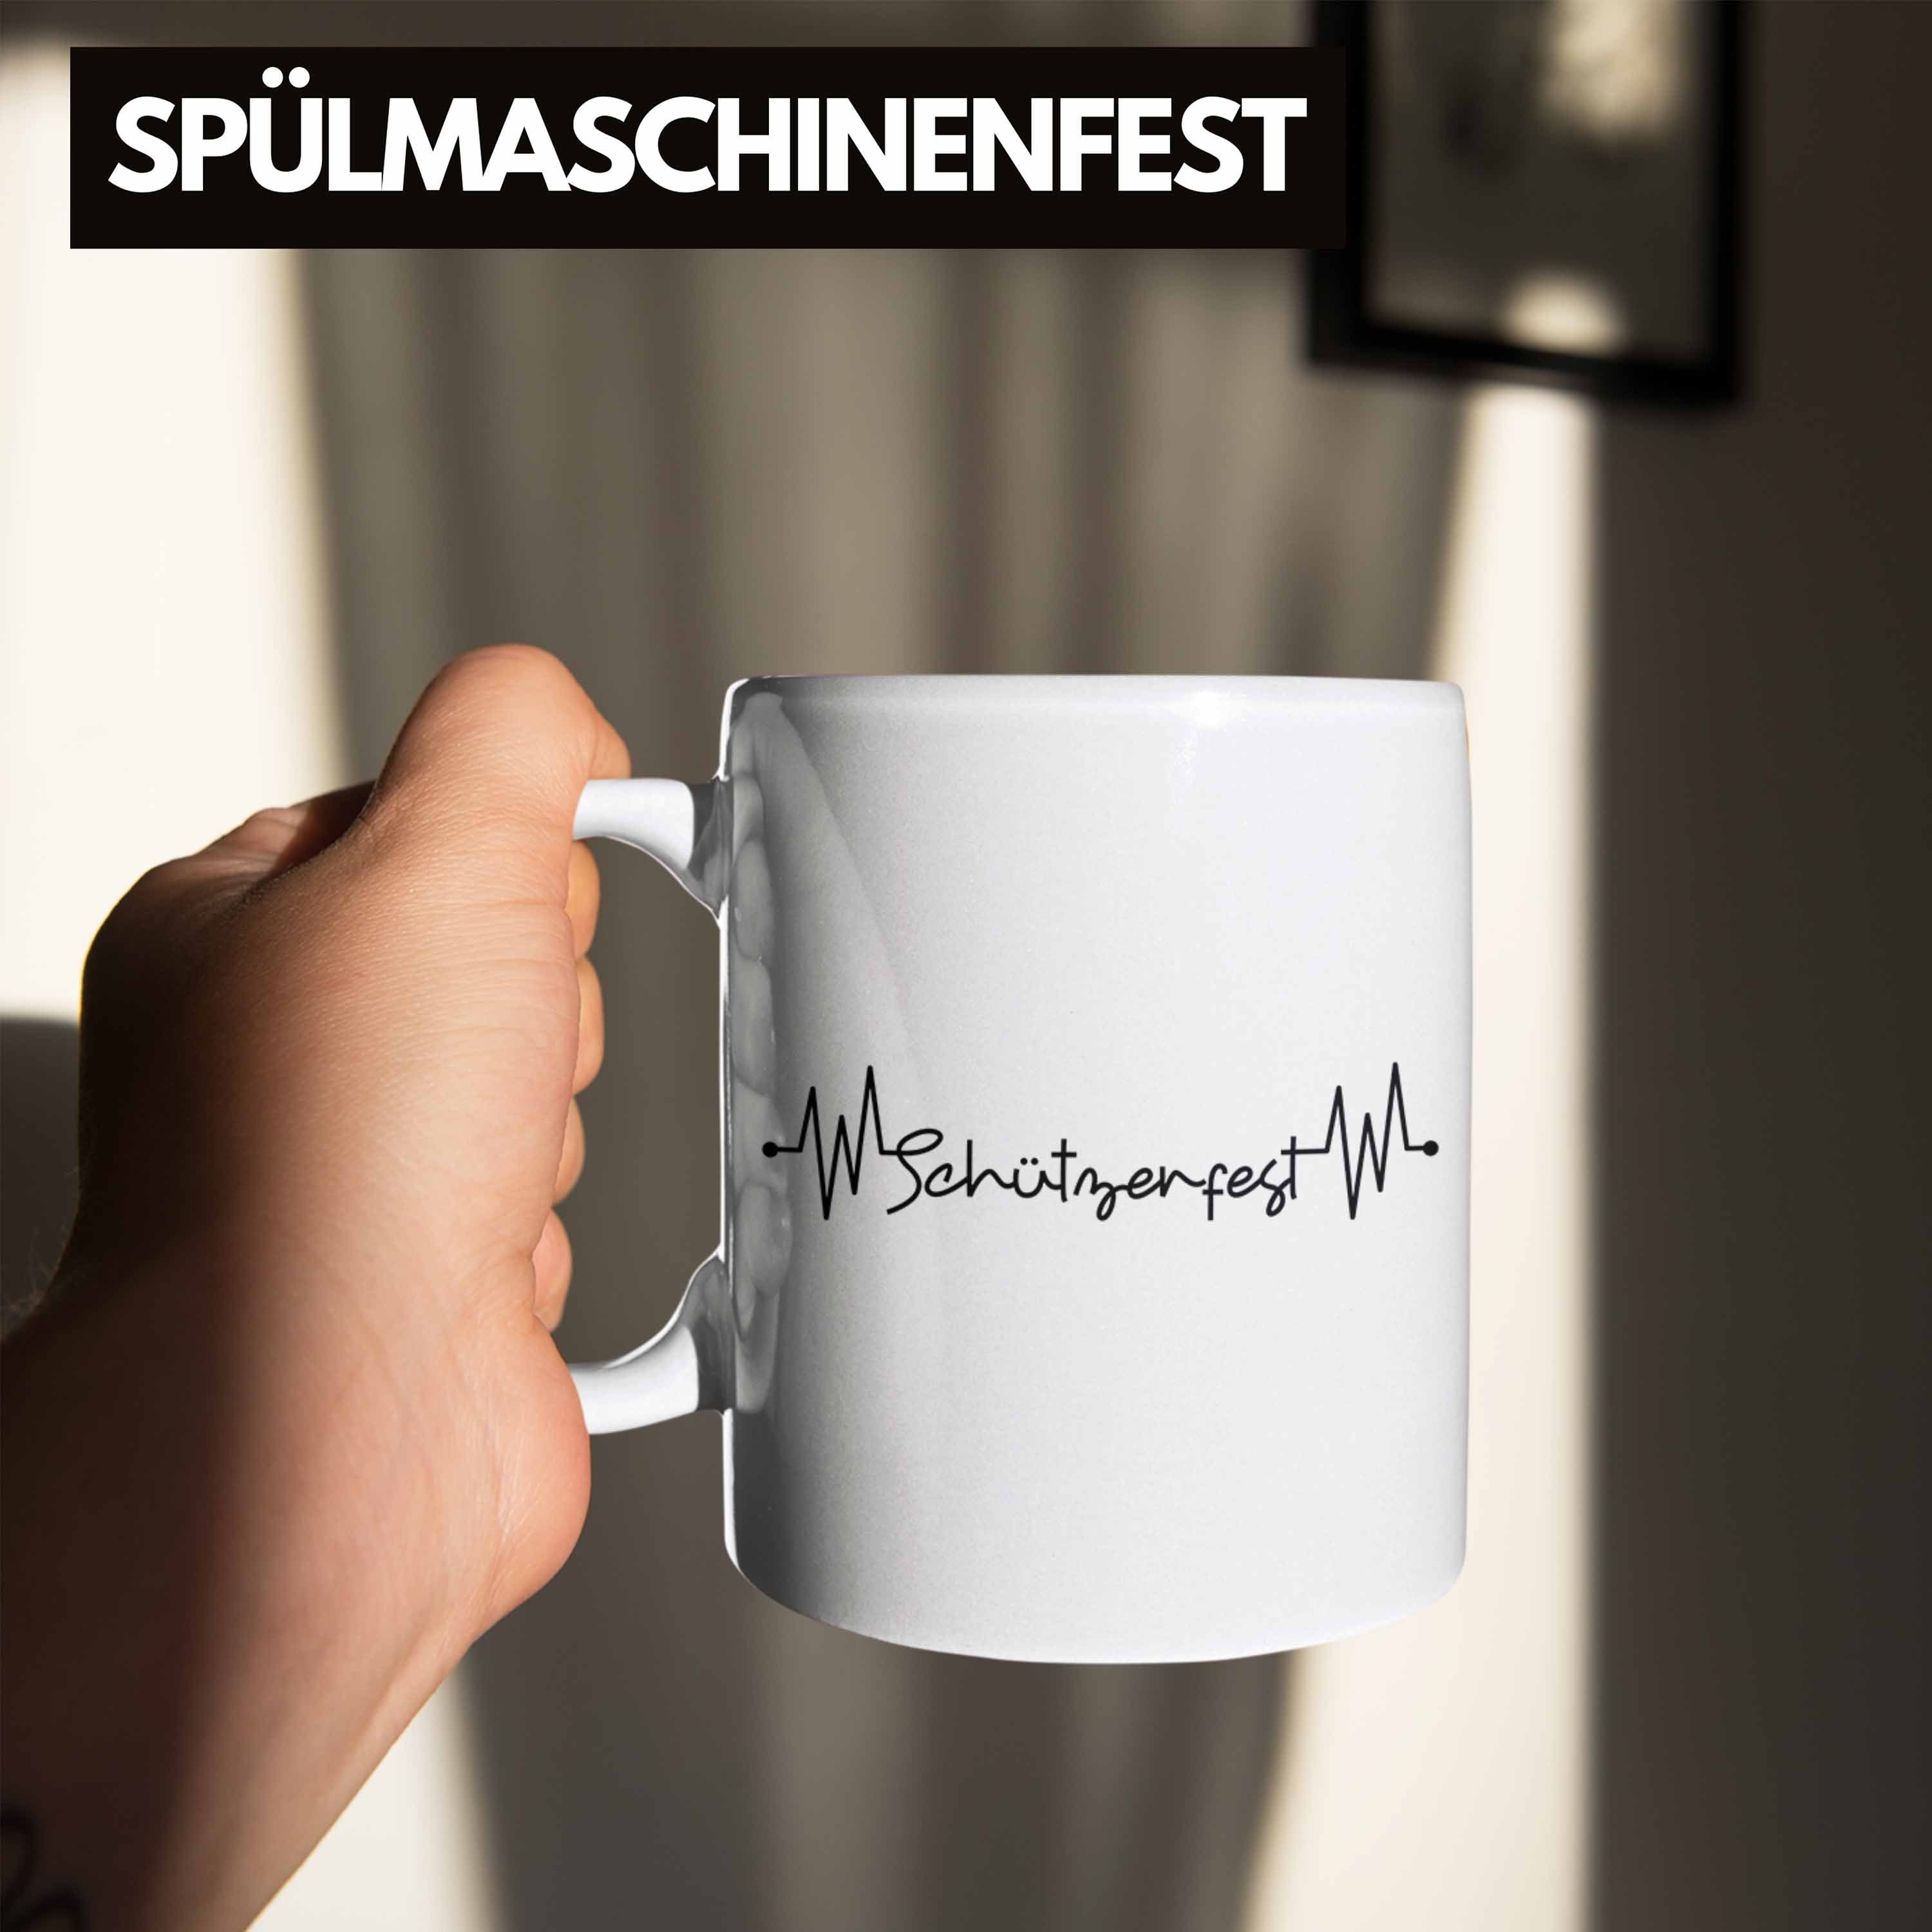 Trendation Tasse Schützenfest Tasse Geschenkidee Kaffee-Bec Weiss Geschenk Dorf-Fest Schützen